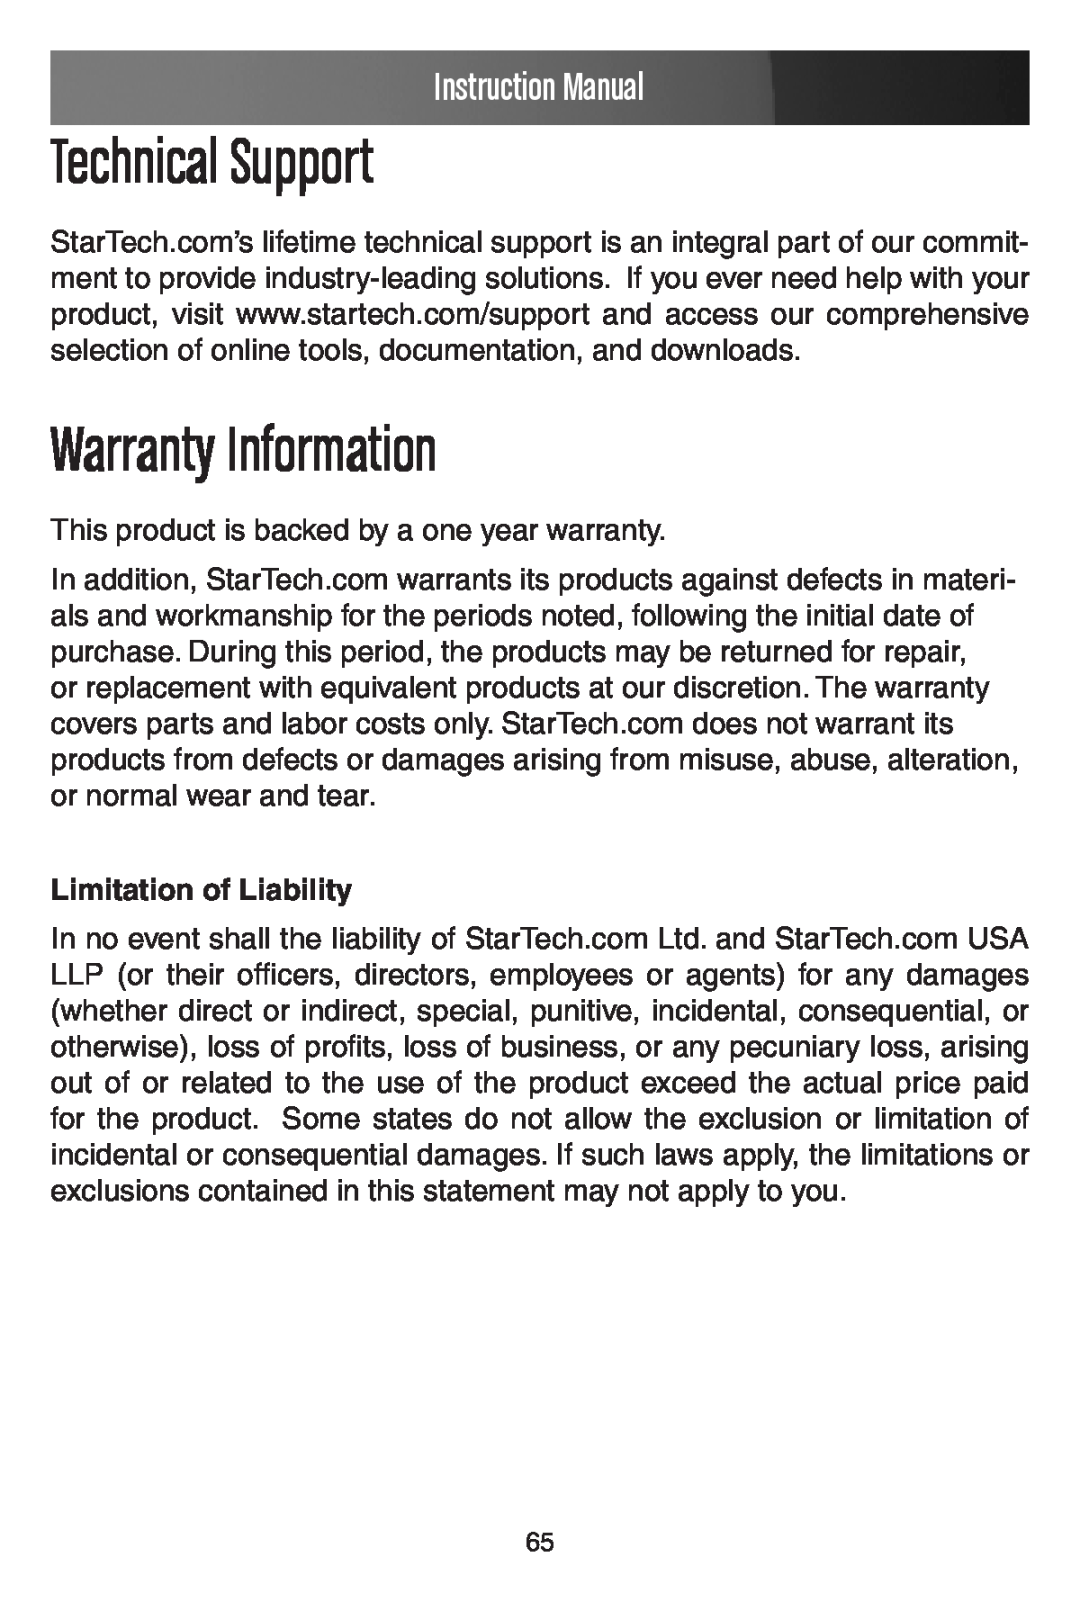 StarTech.com SV441DUSBI Technical Support, Warranty Information, Limitation of Liability, Instruction Manual 